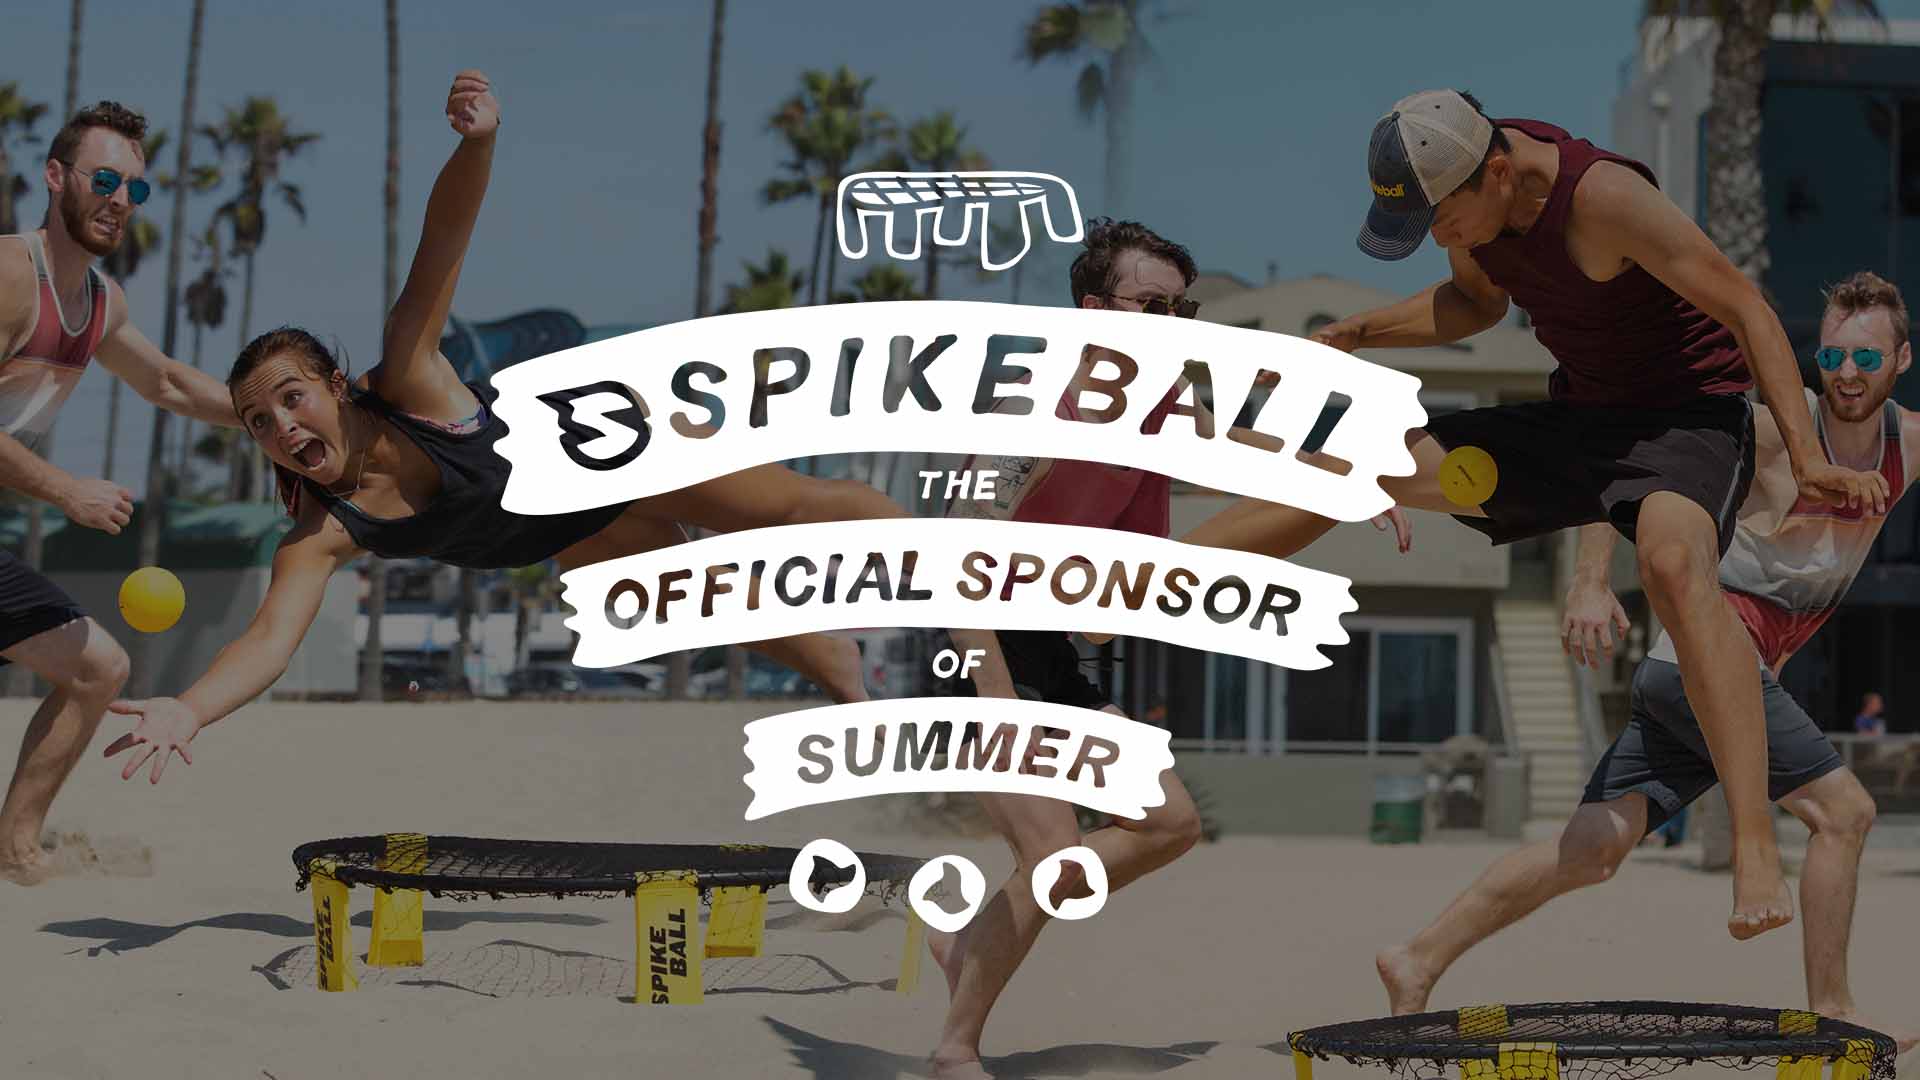 Spikeball Official sponsor of summer